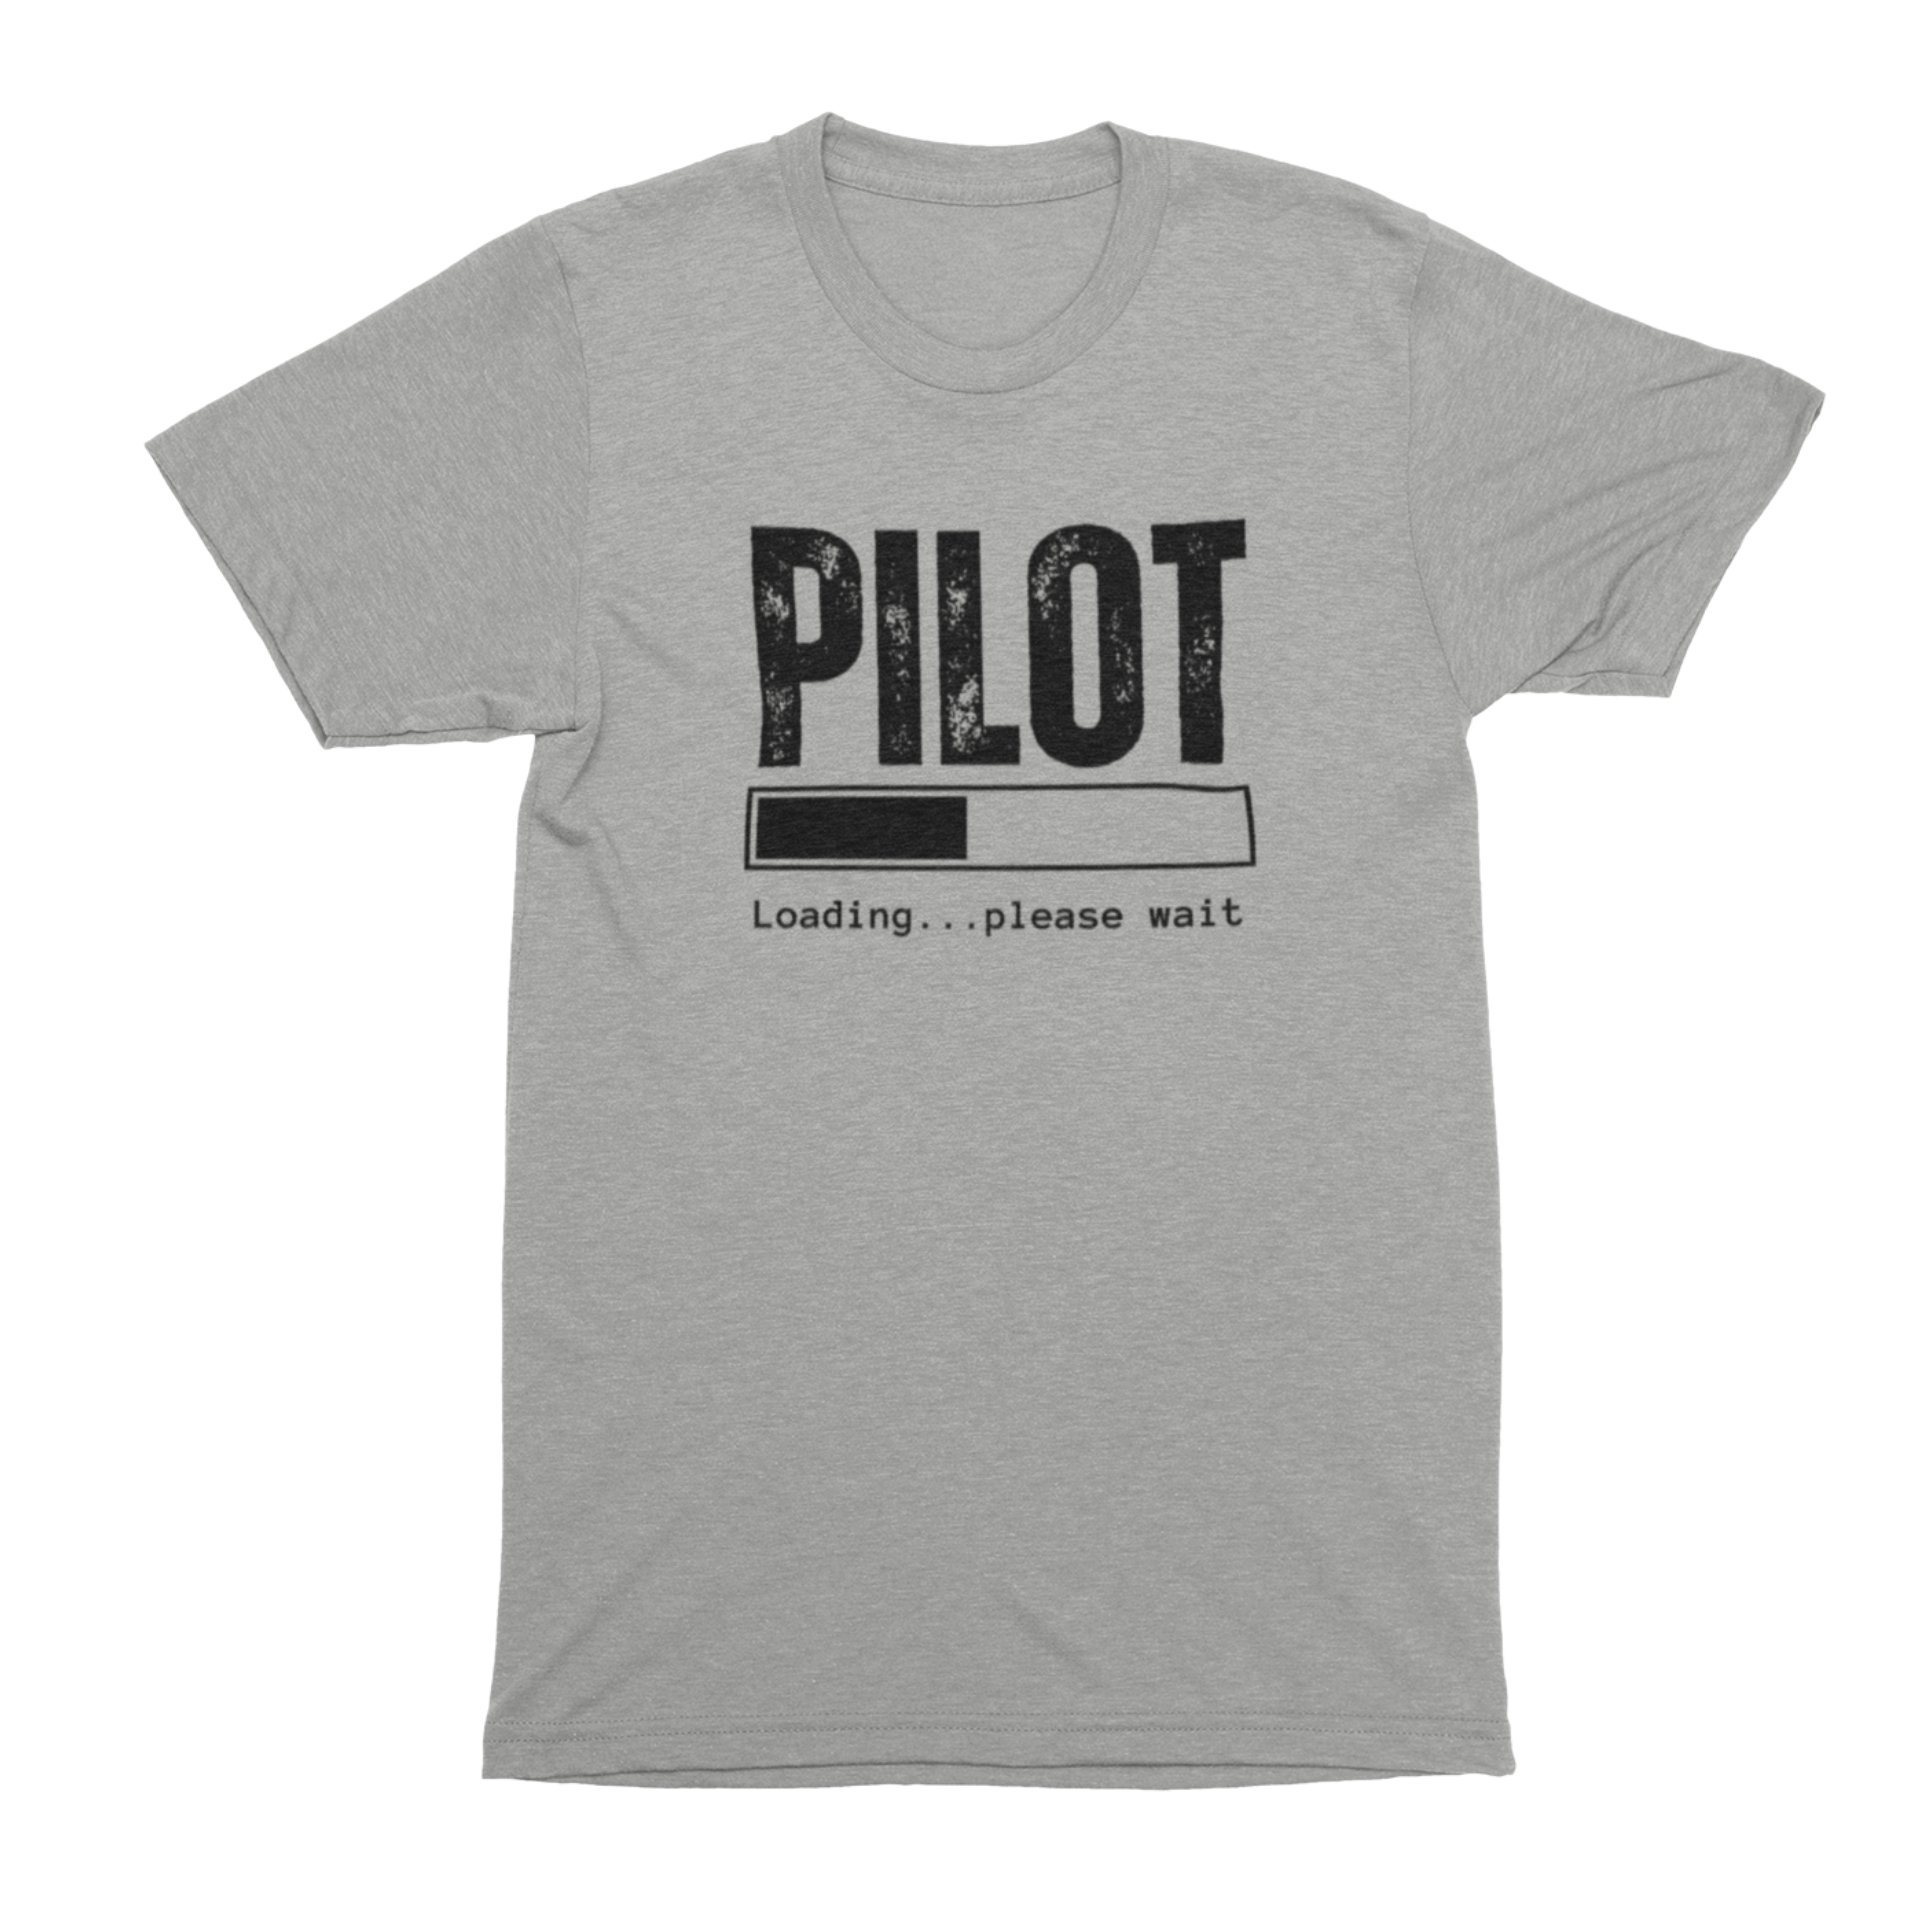 aviation tshirt that says pilot loading please wait